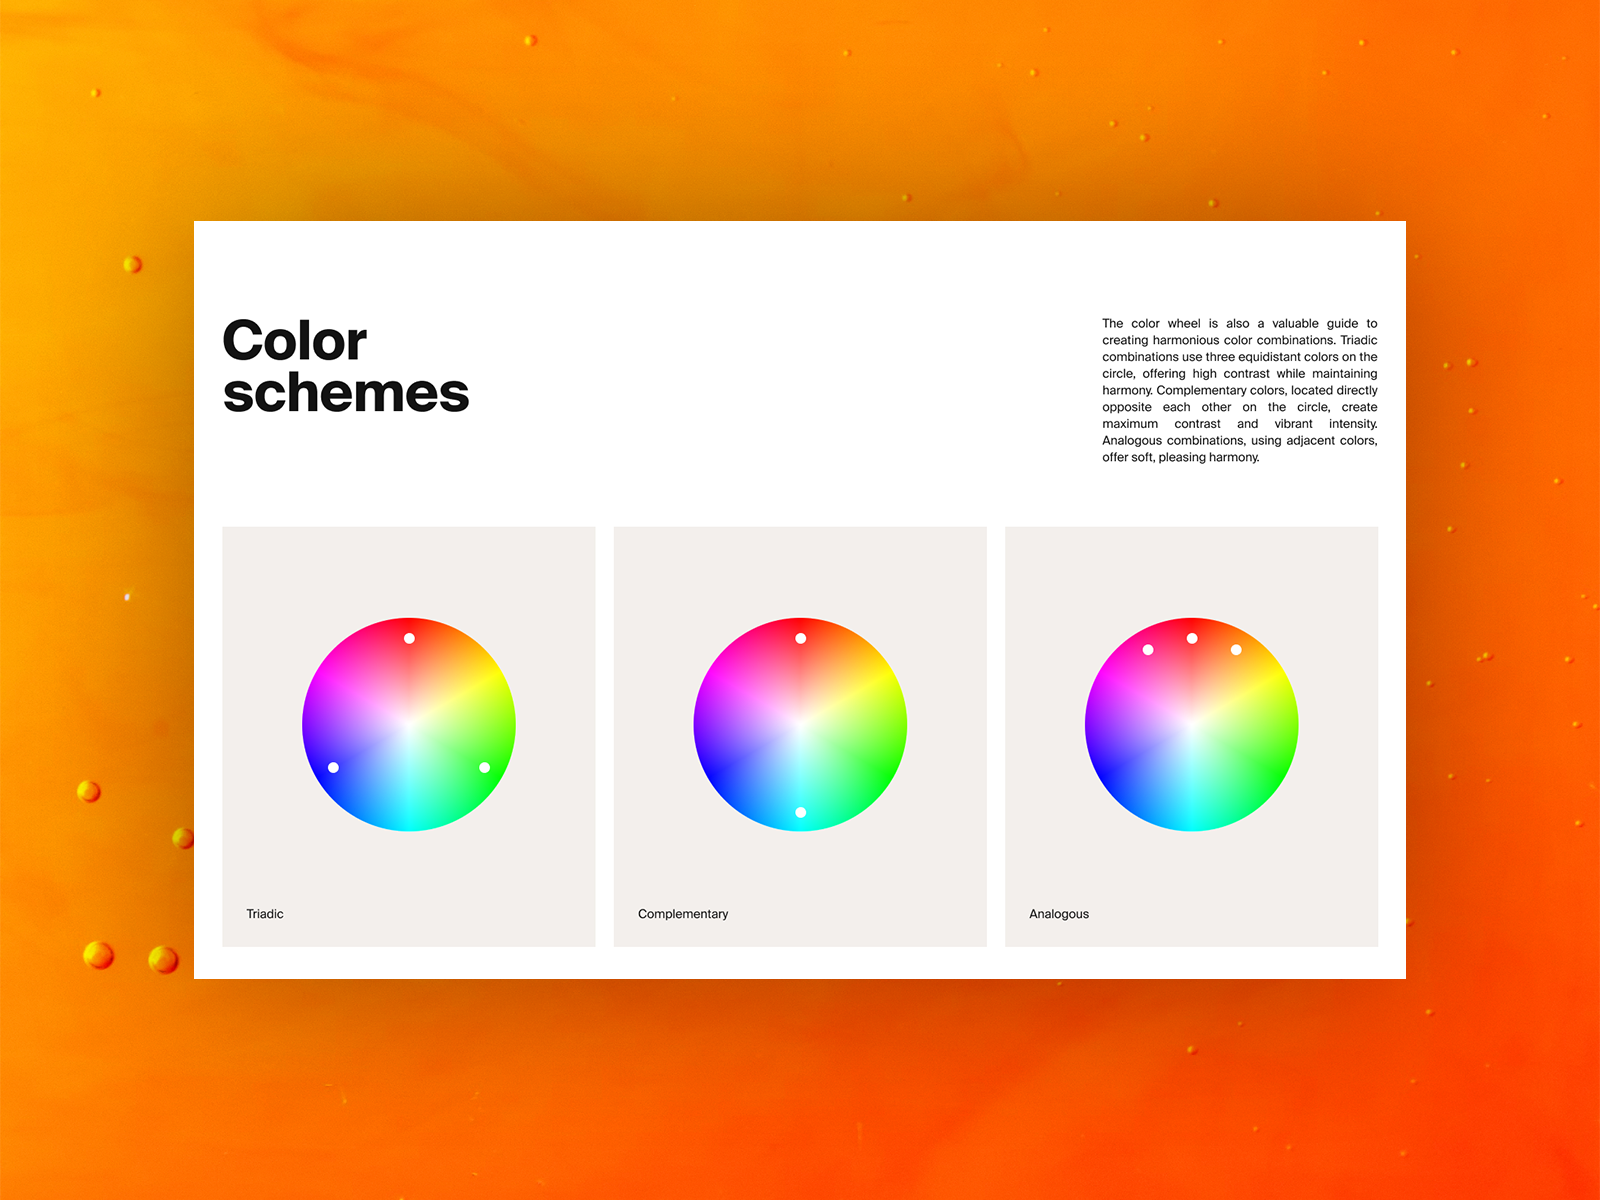 The Color Schemes